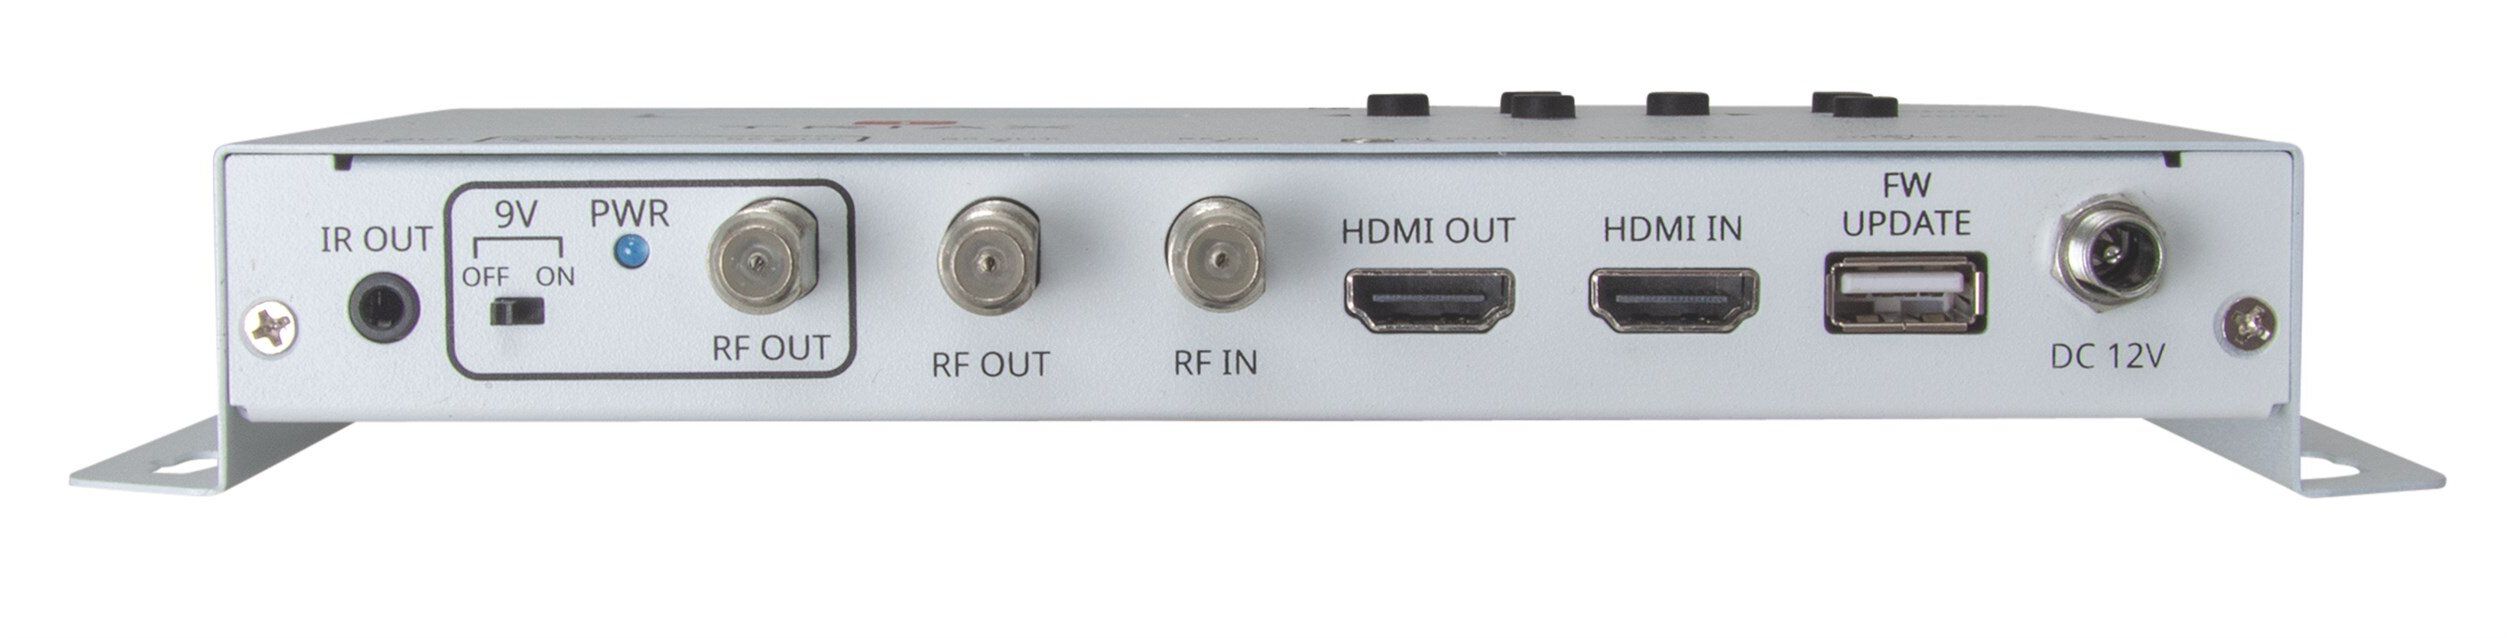 Comprar Modulador de HDMI a COFDM TRIAX MOD 103T Online - Sonicolor